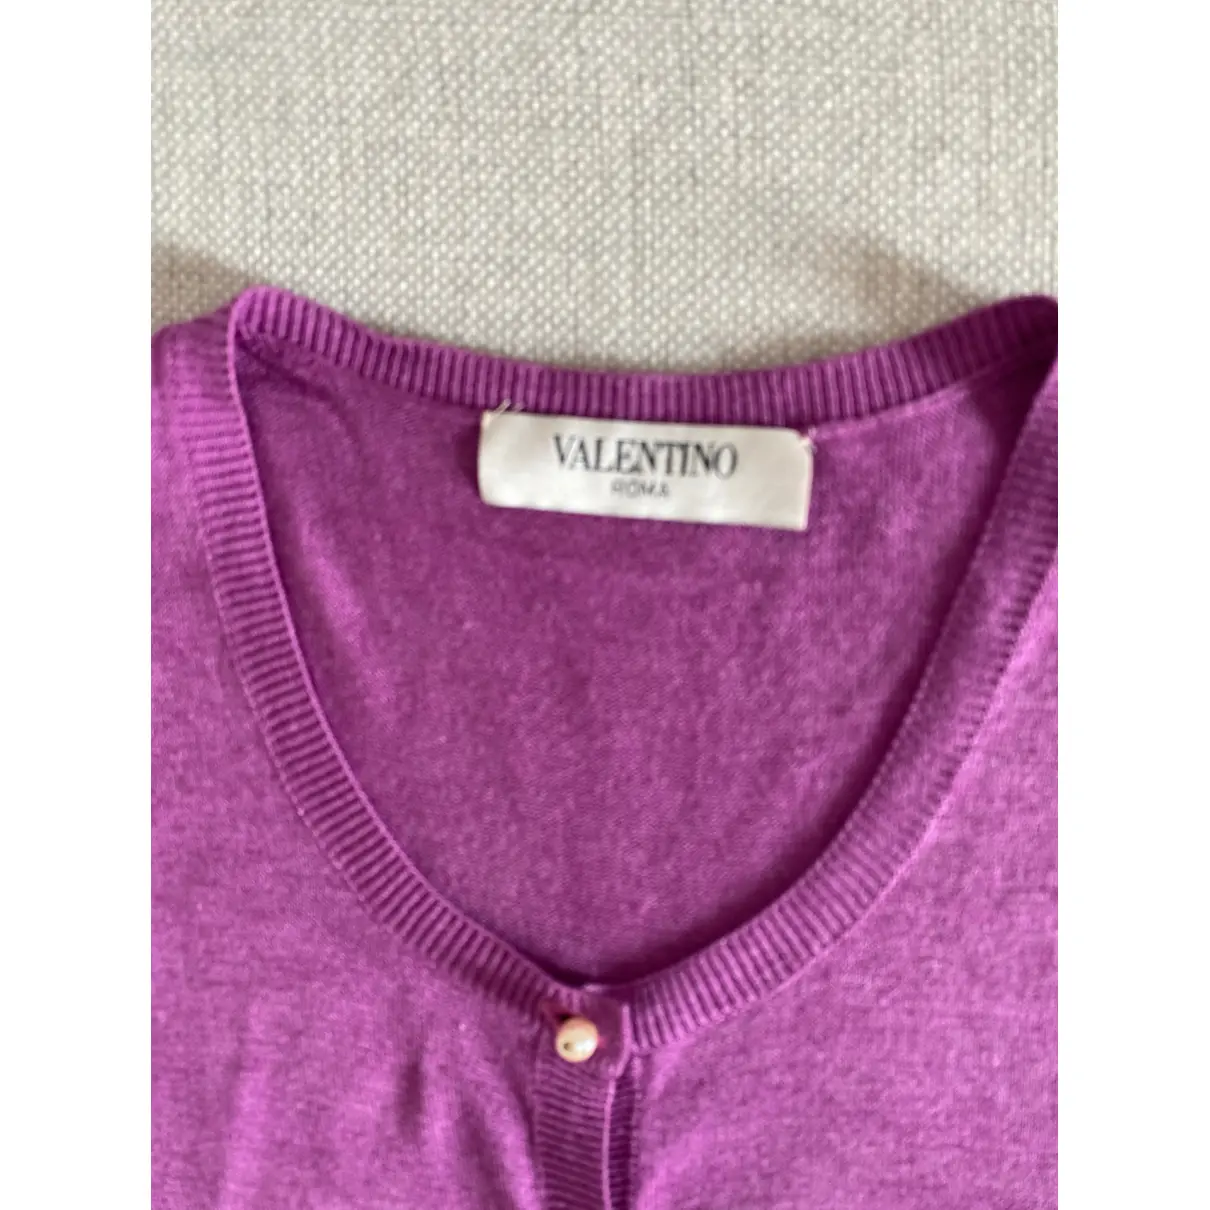 Buy Valentino Garavani Silk cardigan online